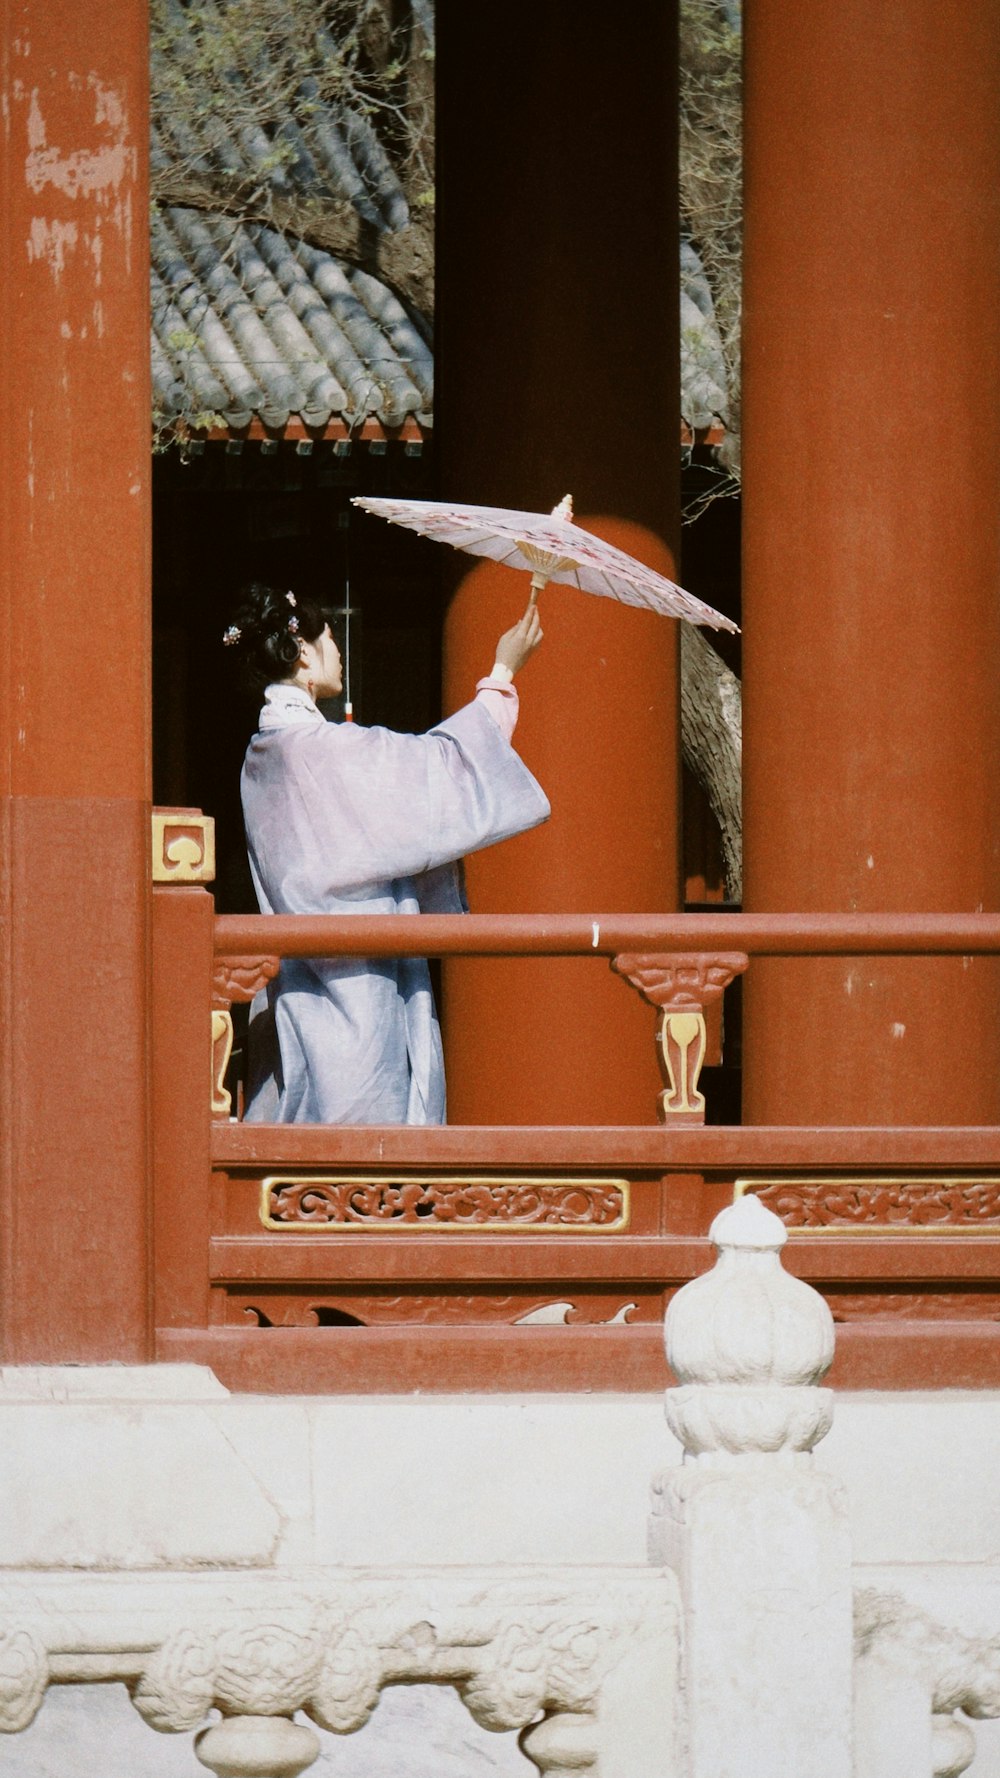 man in white thobe holding umbrella